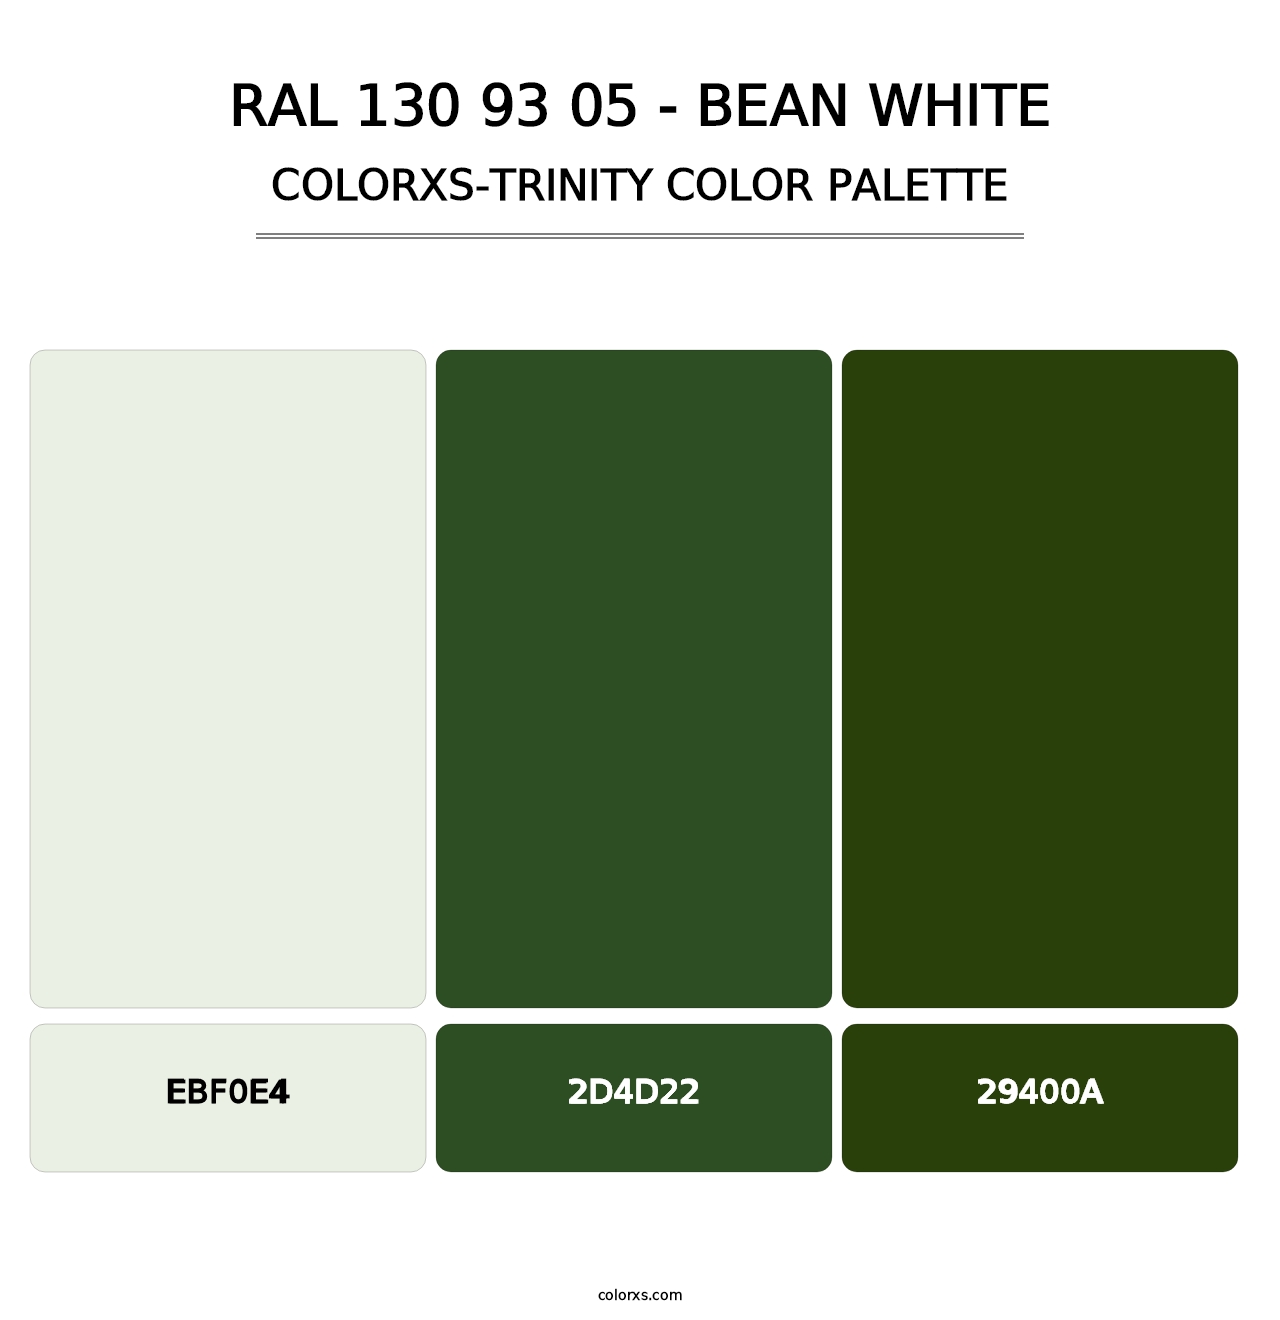 RAL 130 93 05 - Bean White - Colorxs Trinity Palette